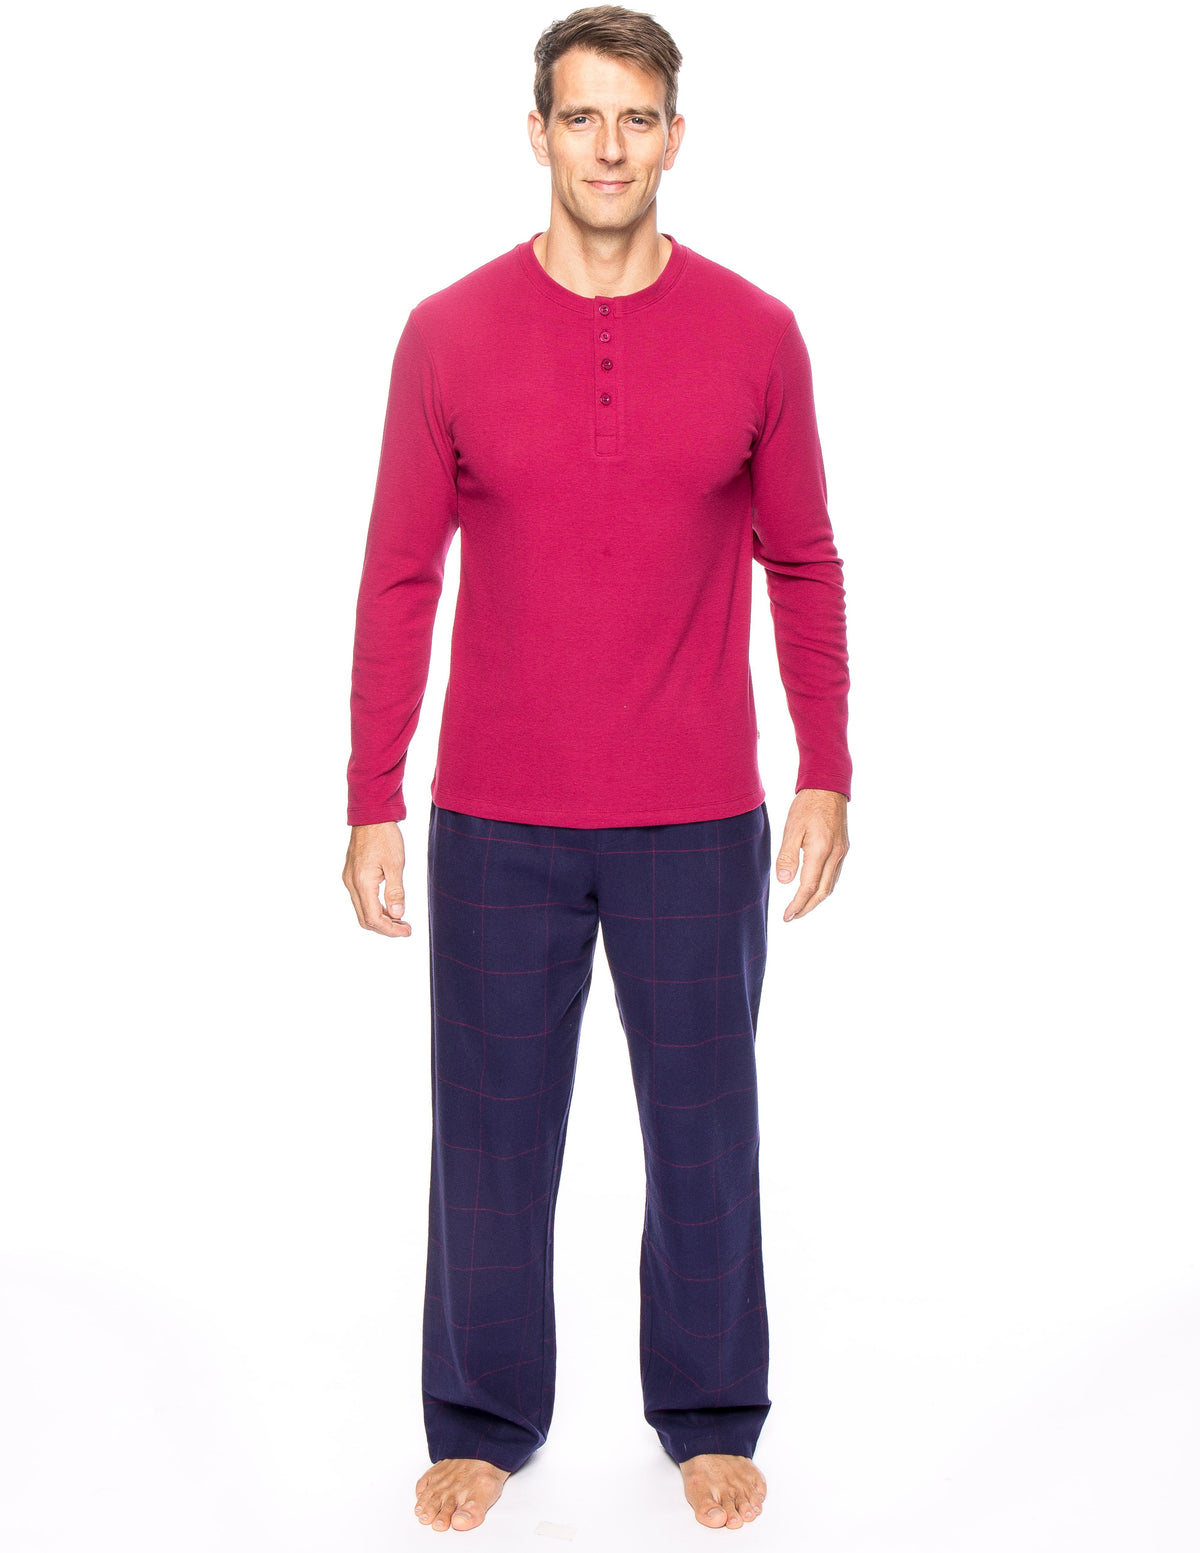 Mens Premium 100% Cotton Flannel Lounge Set - Windowpane Checks Blue/Red